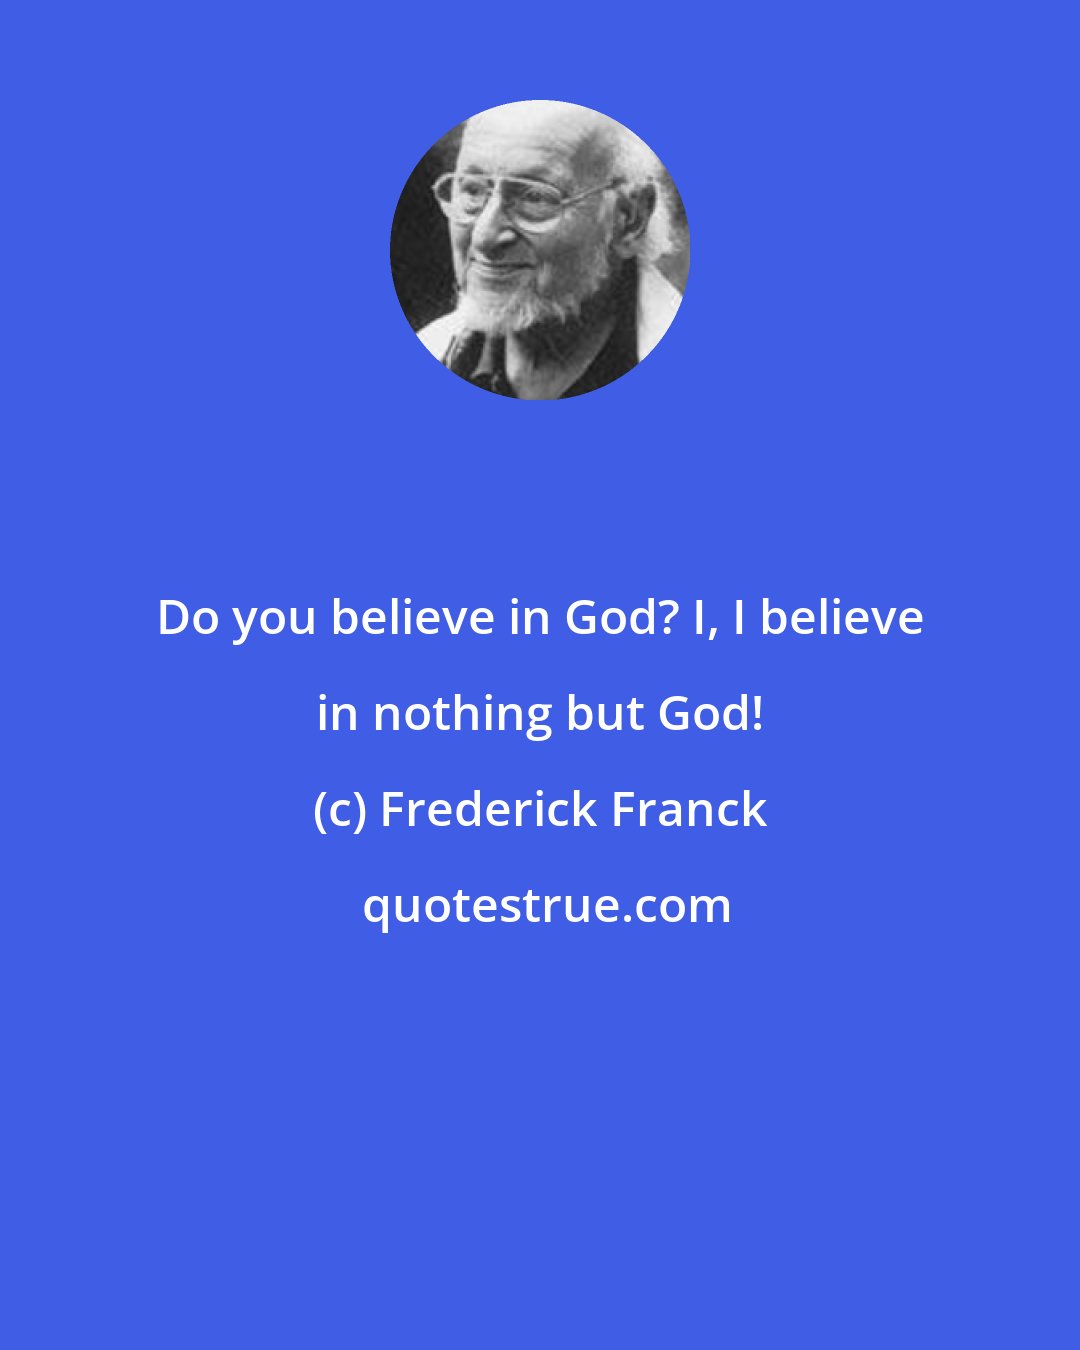 Frederick Franck: Do you believe in God? I, I believe in nothing but God!